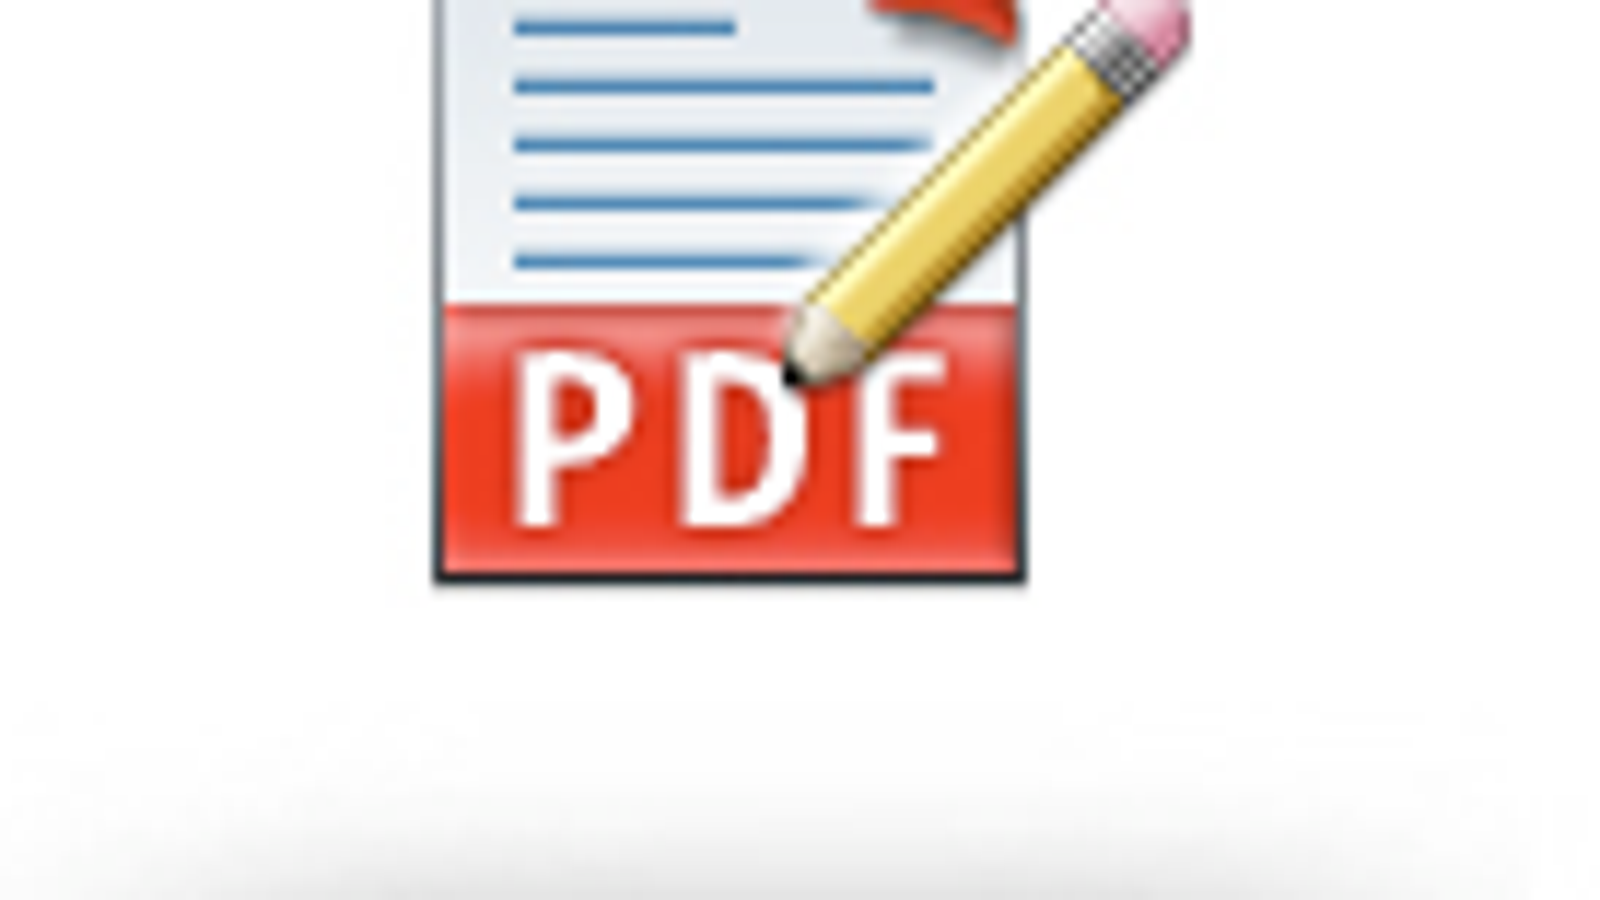 openoffice pdf editor download